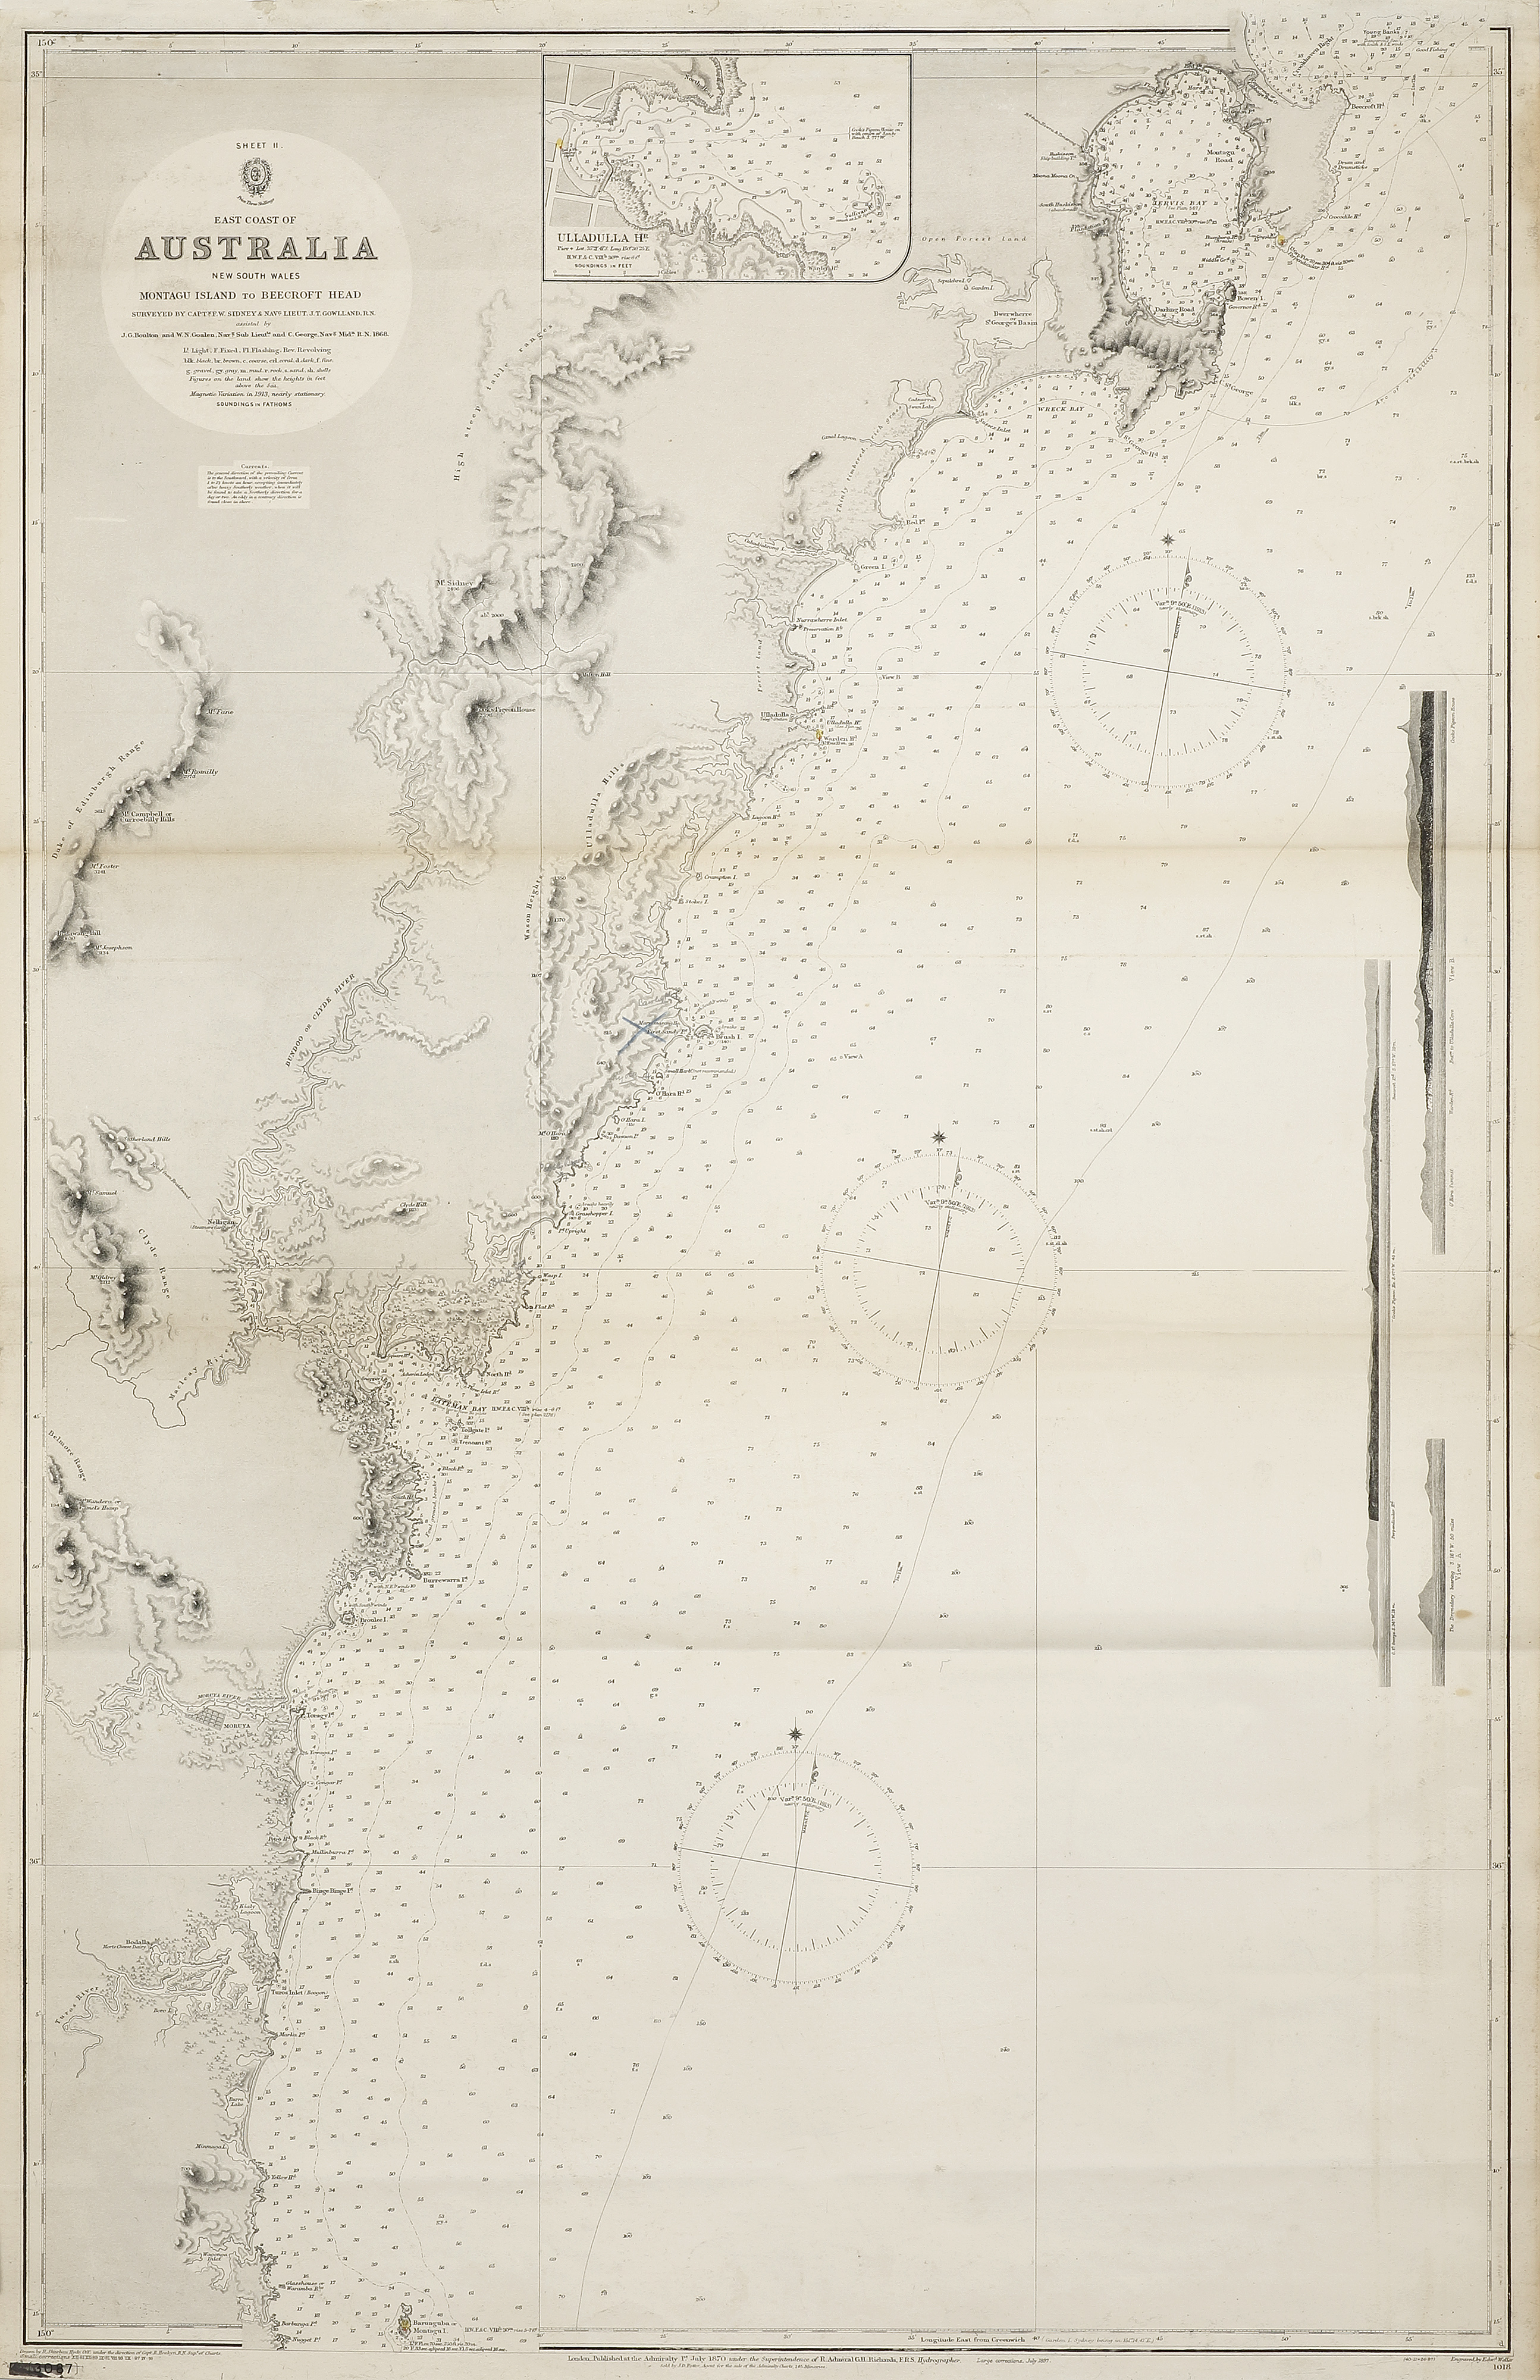 [AUSTRALIA-NSW] Montagu Island to Beecroft Head Surveyed by Captn. F.W.Sidney & Navg.Lieut.J.T.Gowlland R.N. assisted by J.G.Boulton and W.N.Goalen, Navg. Sub Lieut.s and C.George, Navg. Midn. R.N.1868. - Antique Map from 1870